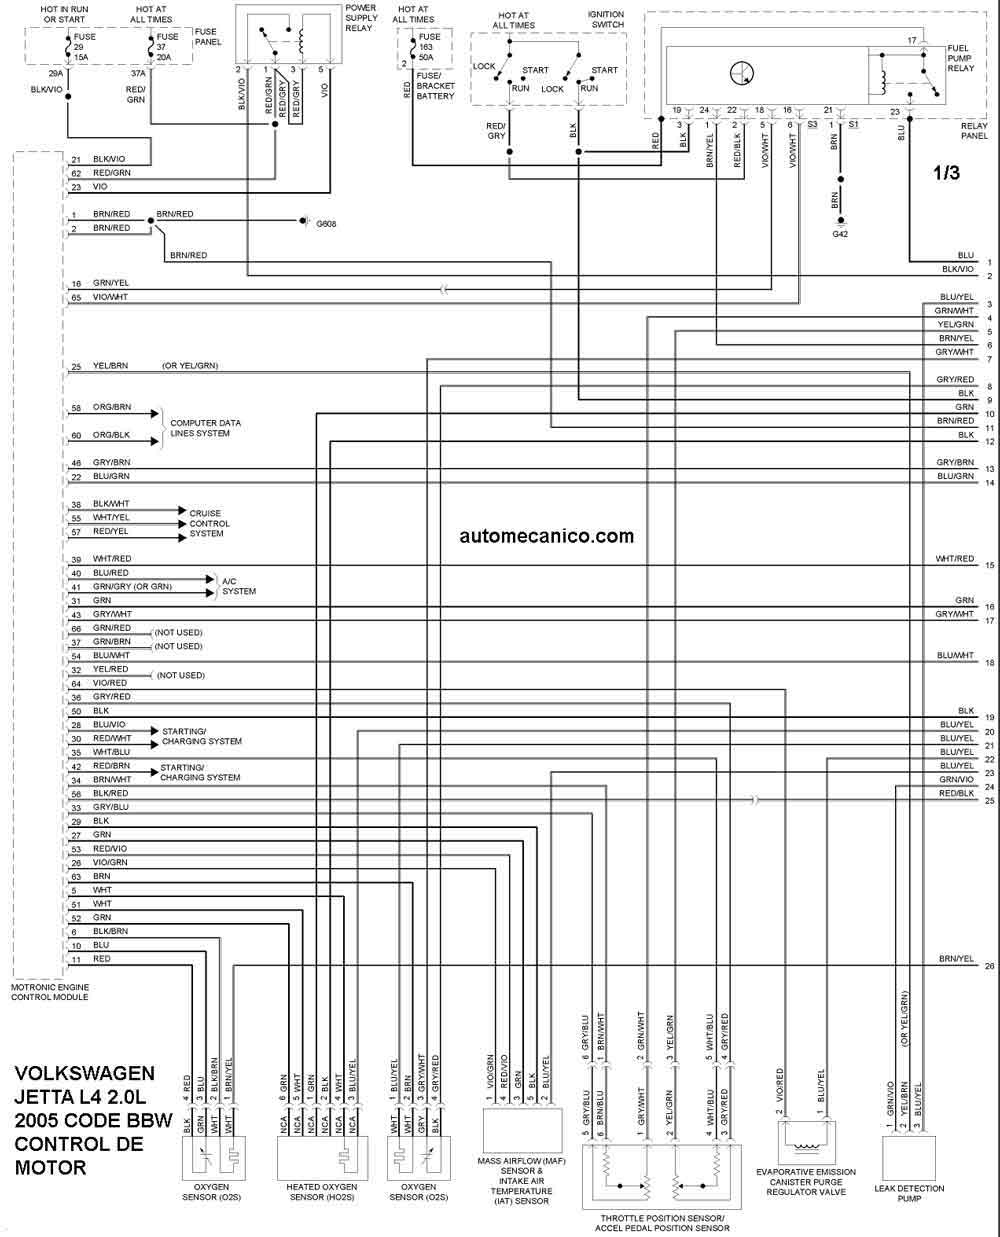 [DIAGRAM] Wiring Diagram De Jetta A4 2004 FULL Version HD Quality A4